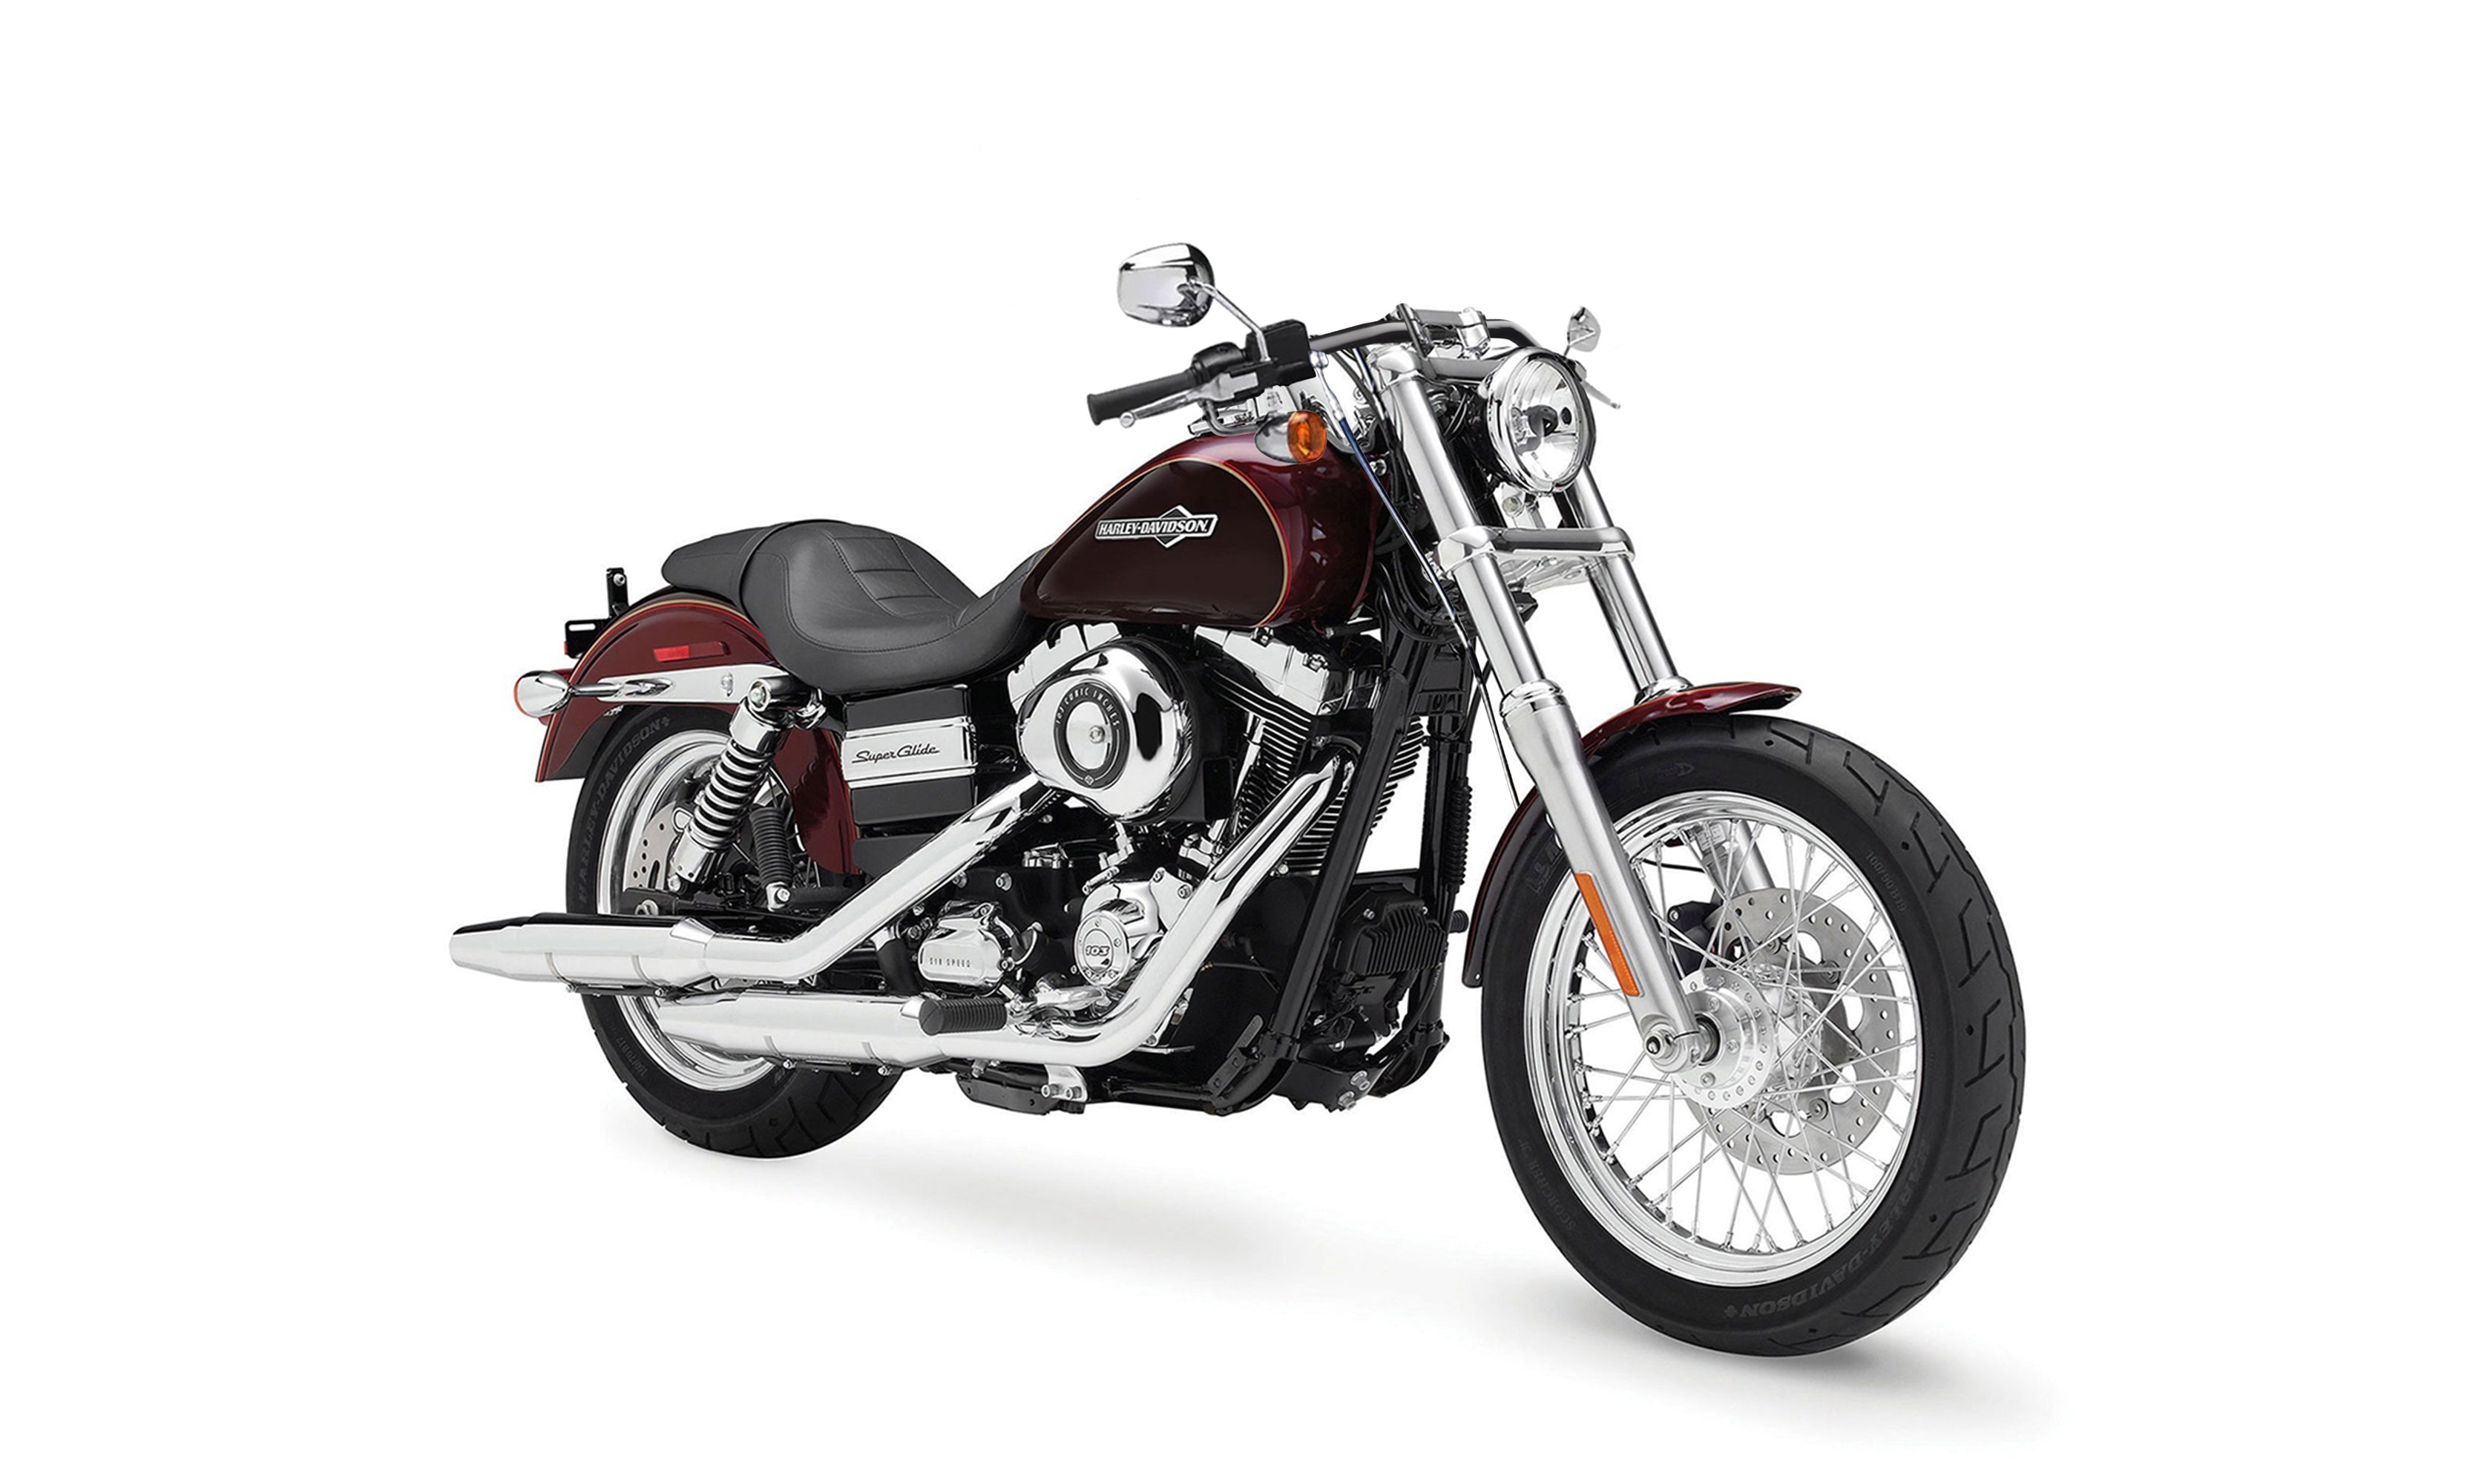 Viking Iron Born Drag Handlebar For Harley Dyna Super Glide FXD Gloss Black Bag on Bike View @expand